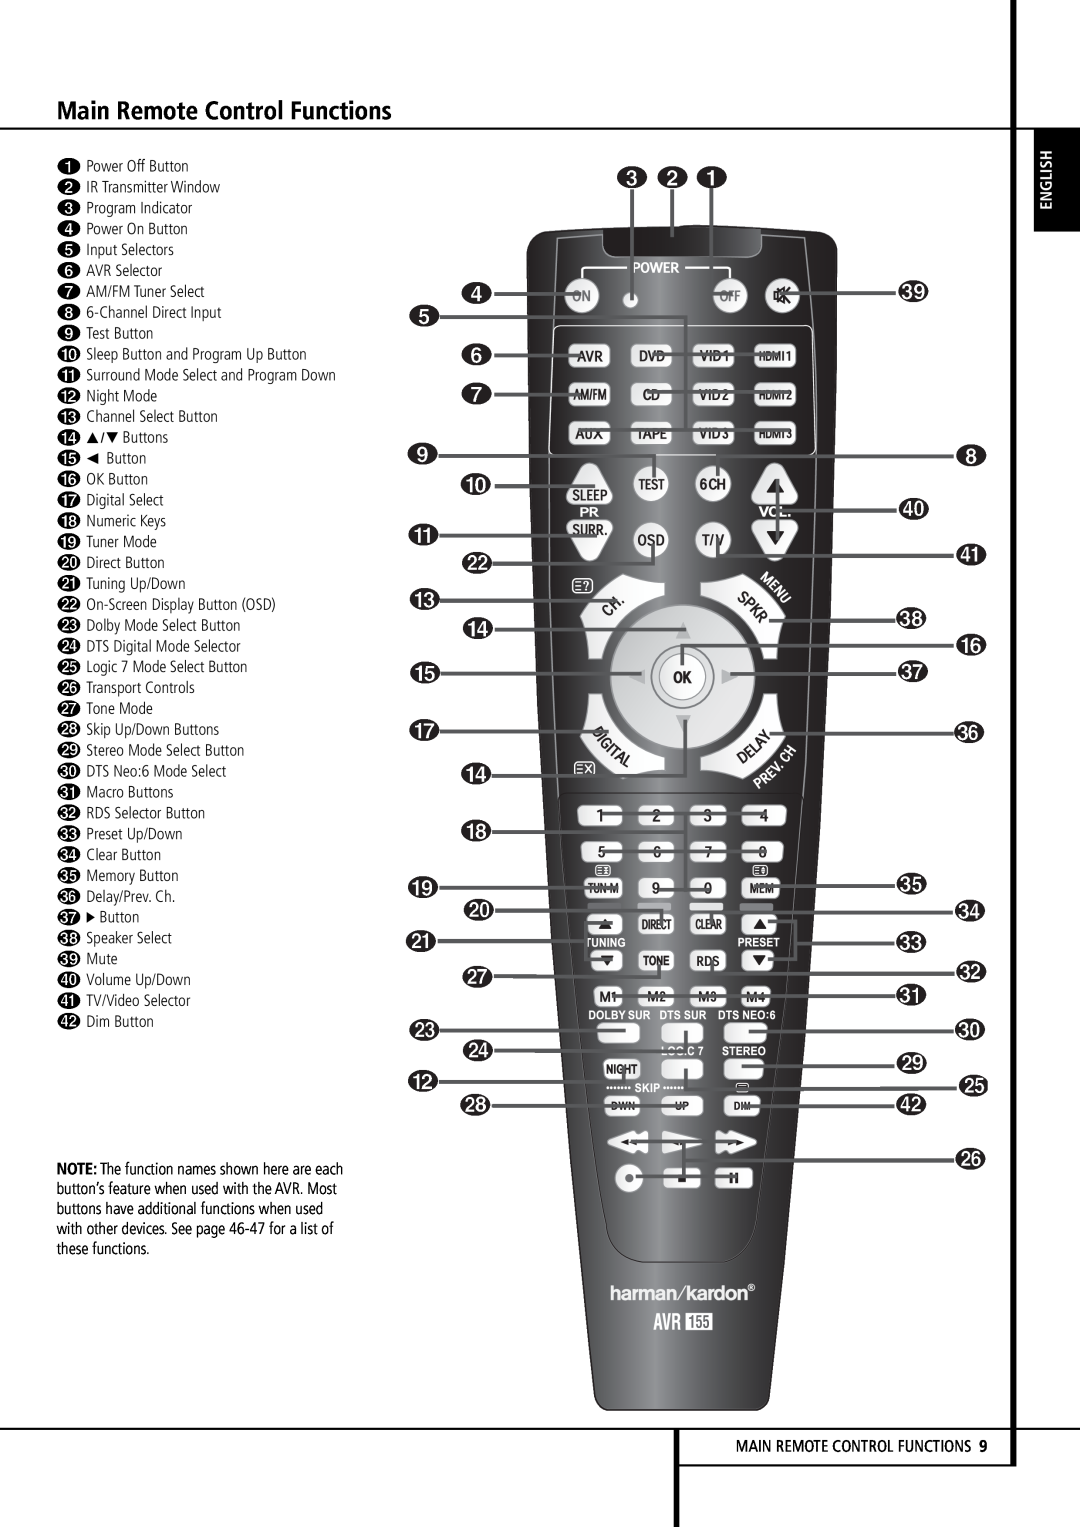 Harman-Kardon AVR 155 owner manual Main Remote Control Functions, A L C D E G D H, J K Q M N Bo P, English 